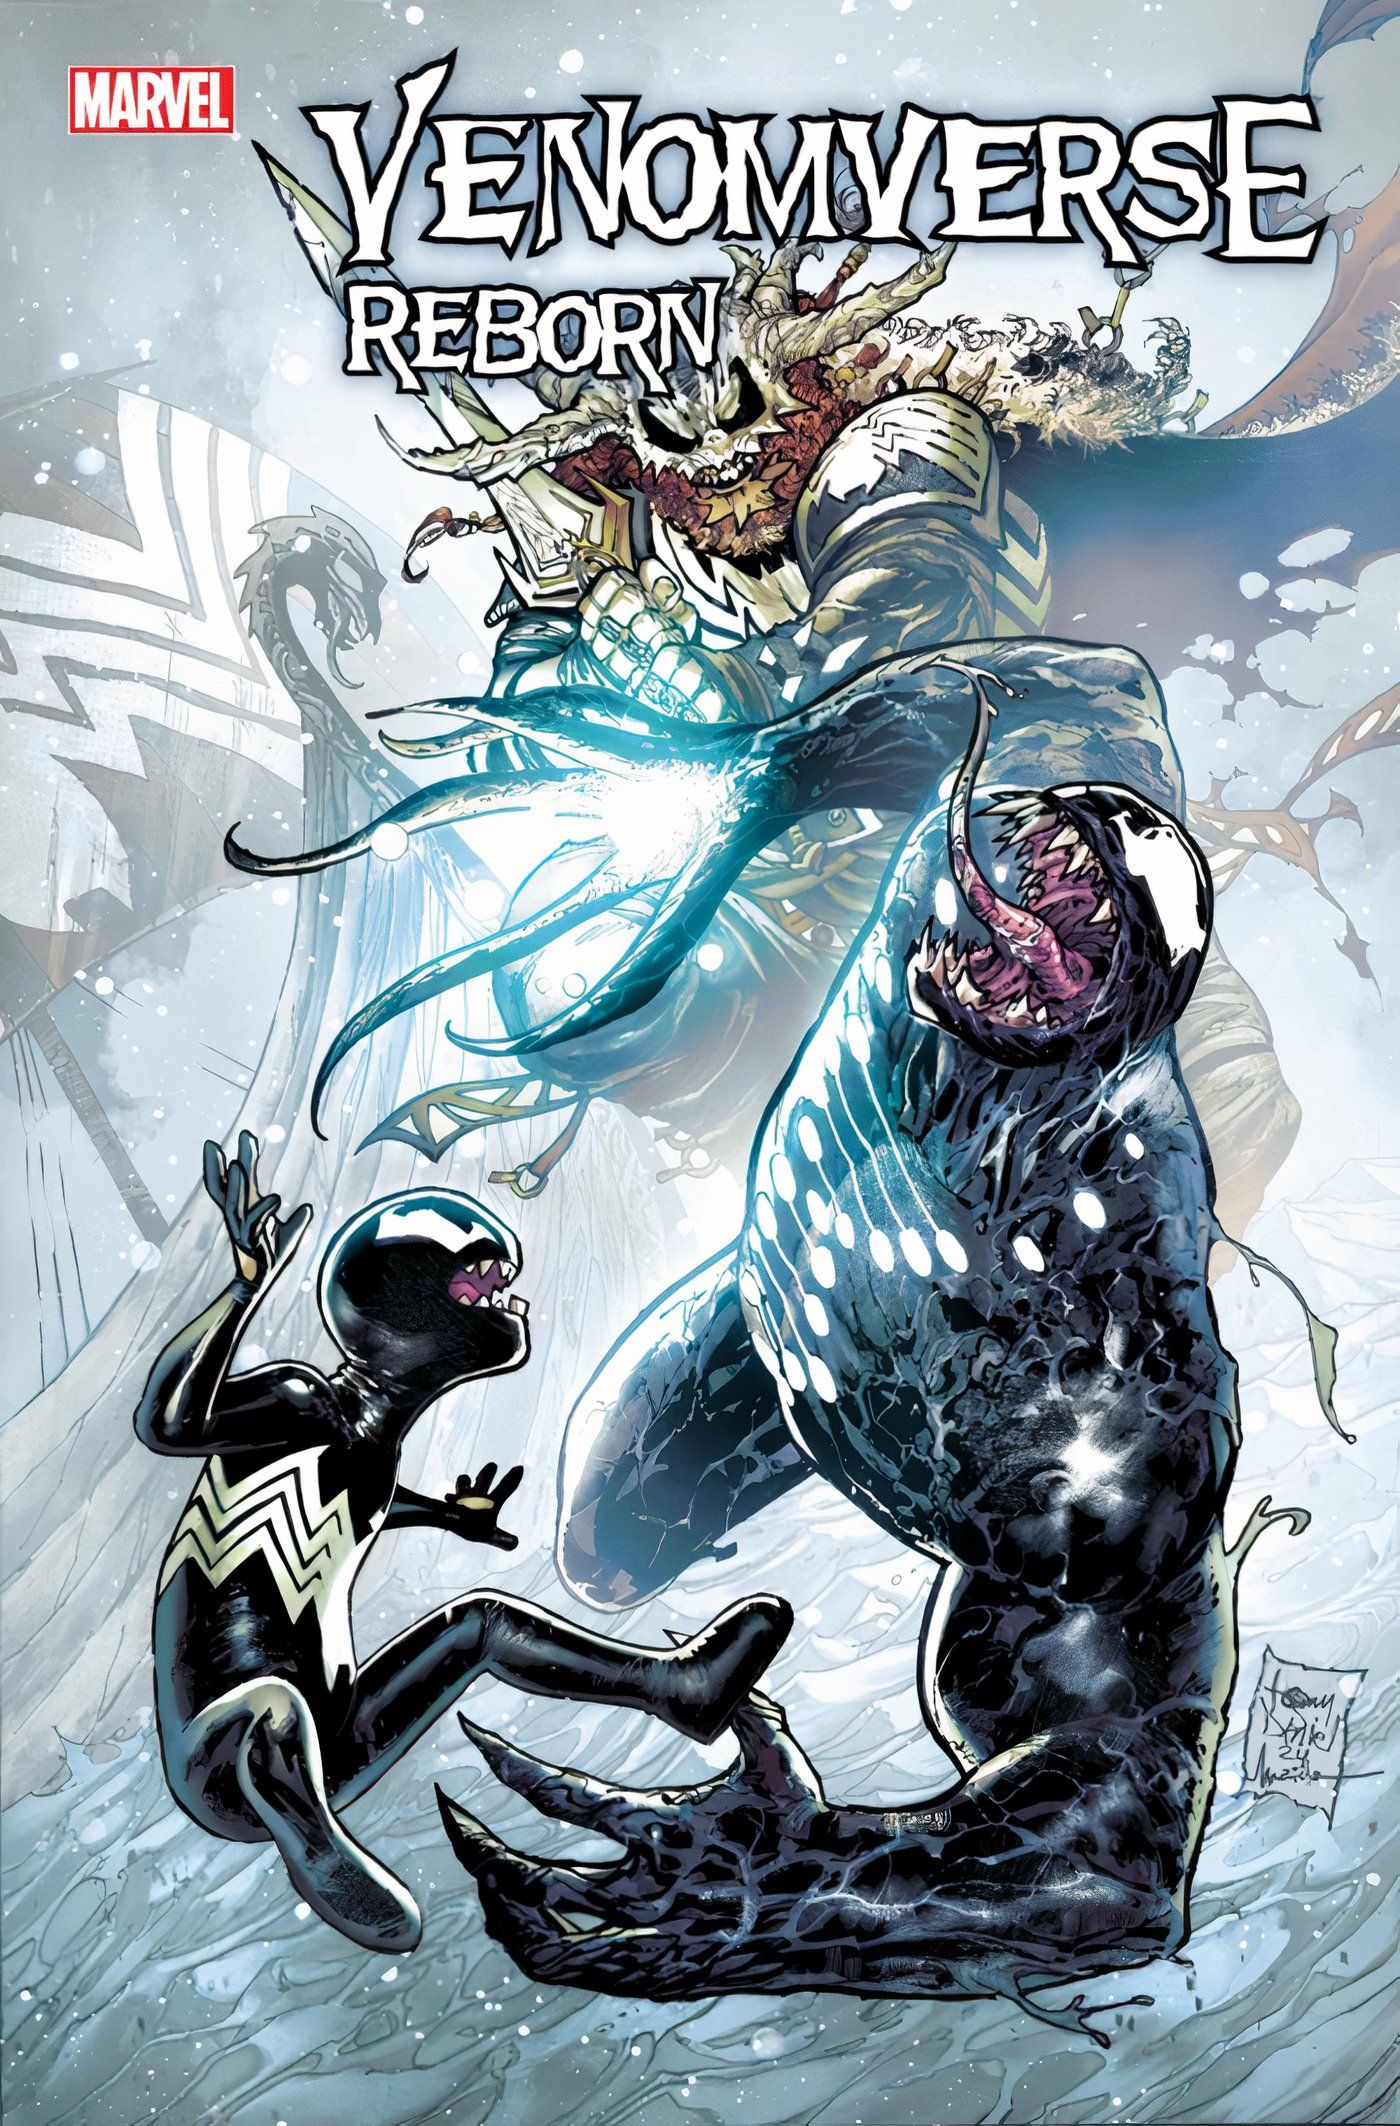 Venom de Venom: The End na capa de Venomverse Reborn #2.